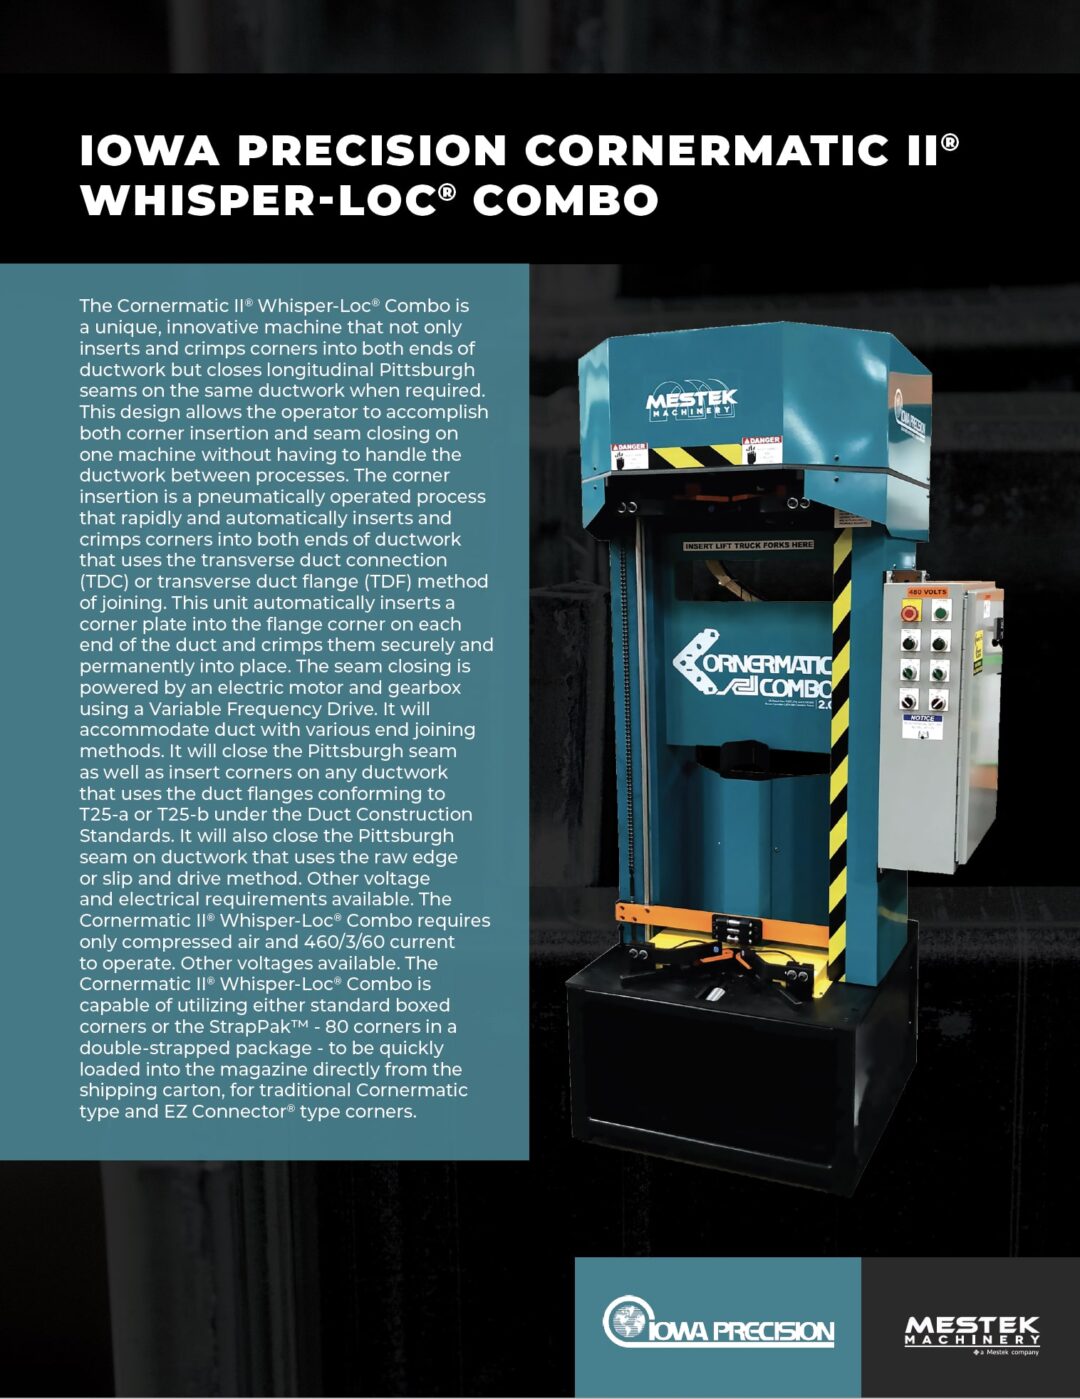 Brochure: Iowa Precision Cornermatic II Whisper-Loc Combo